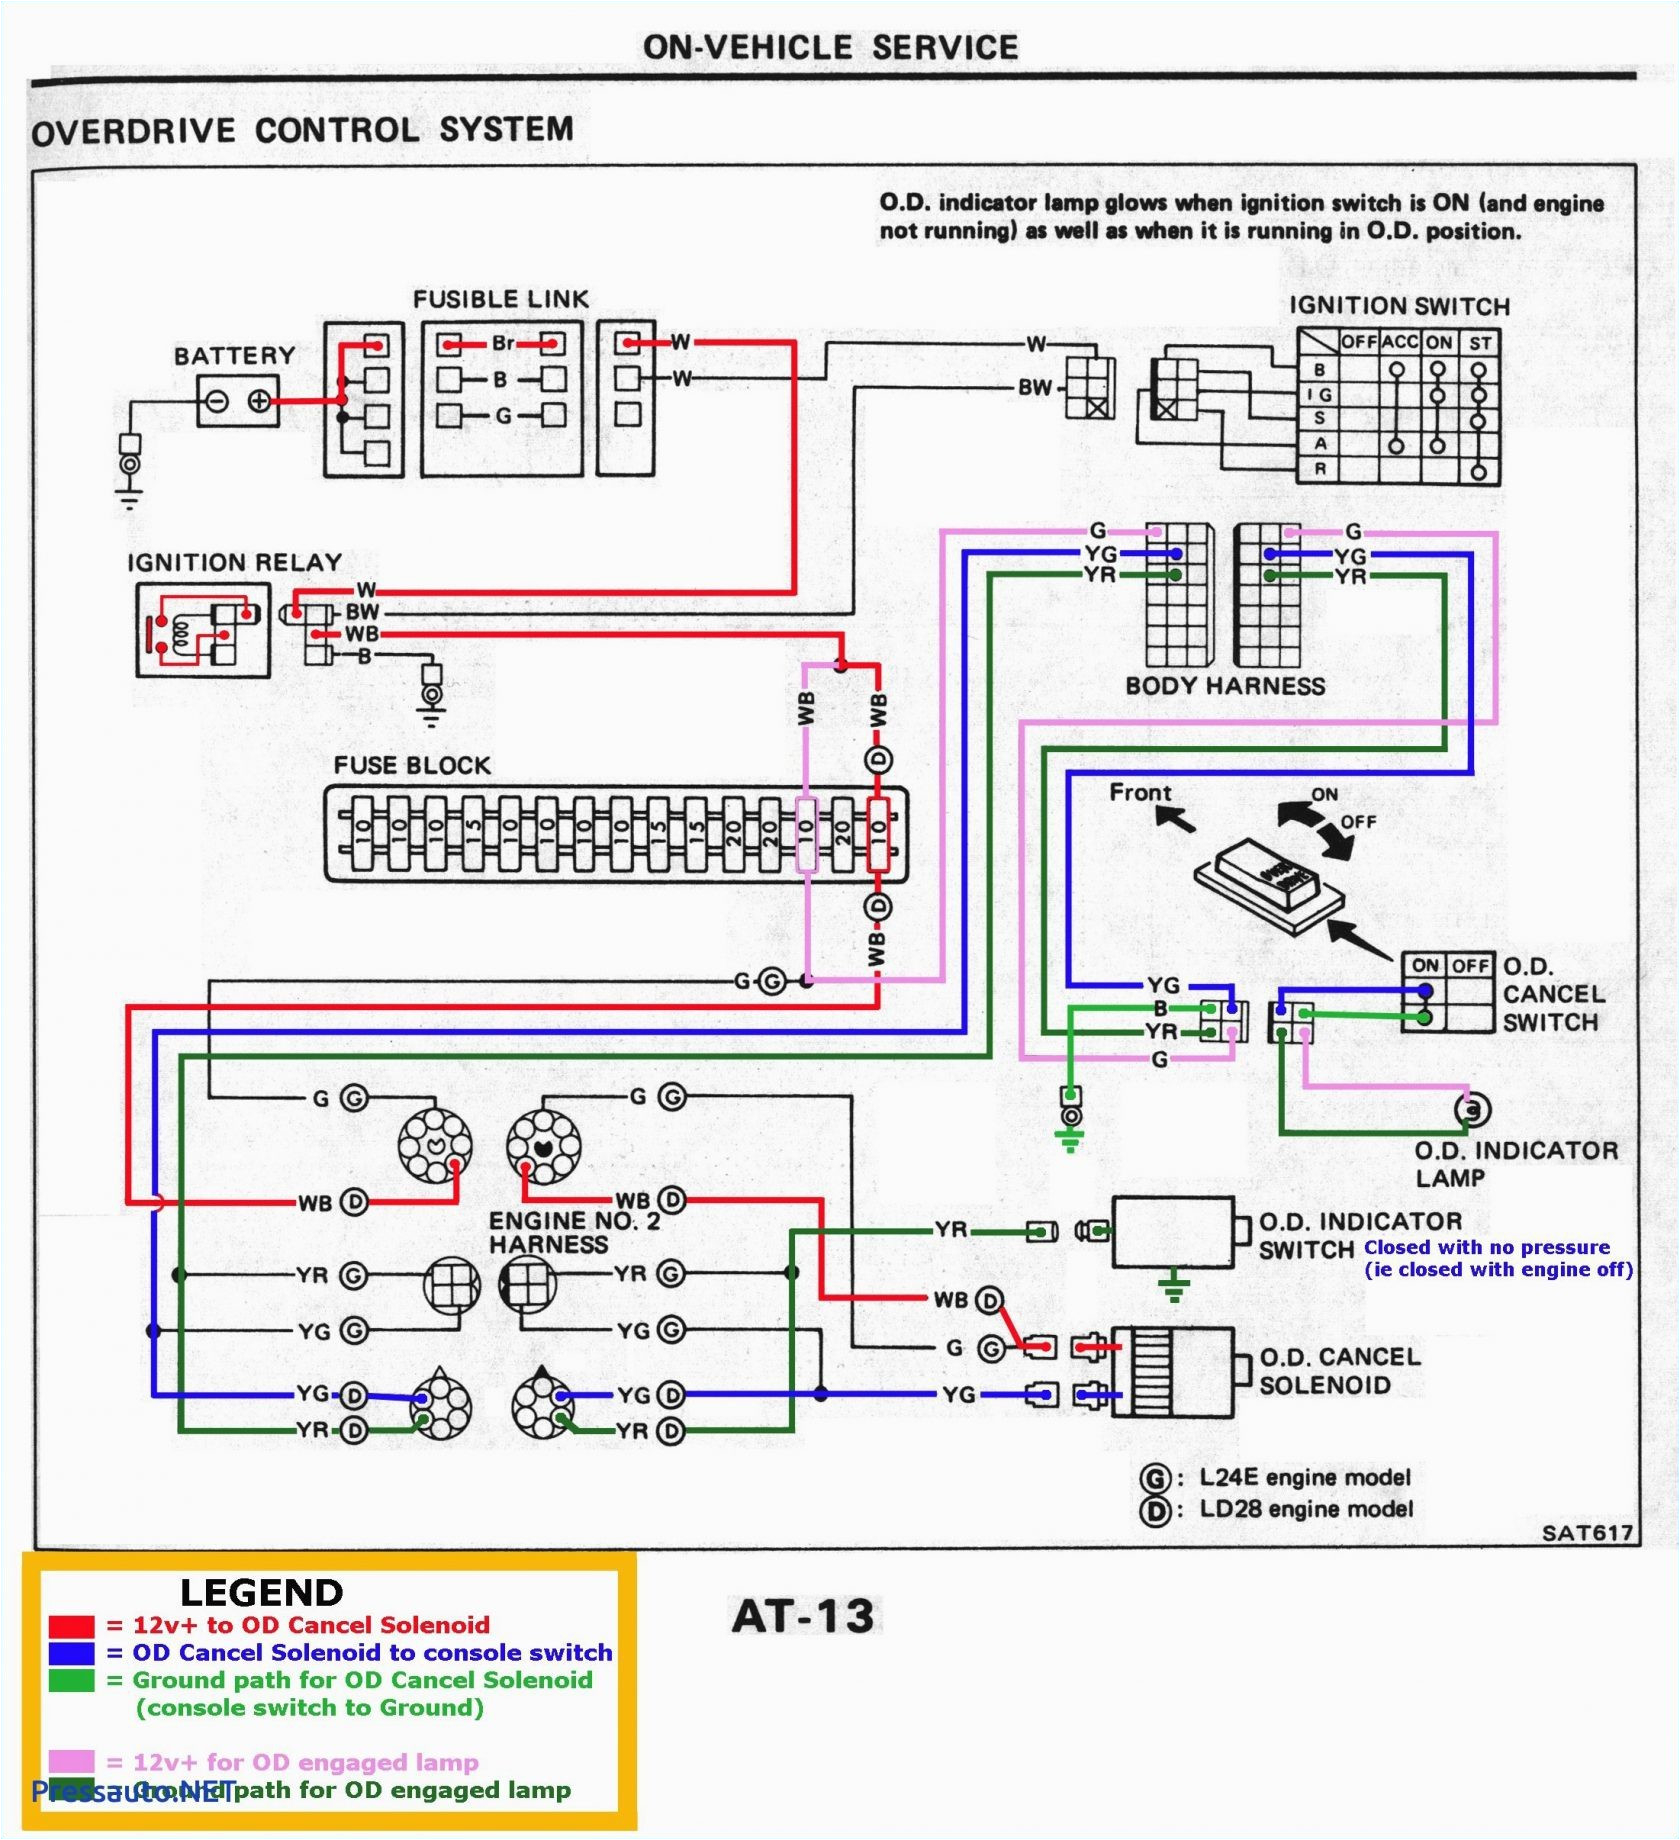 evergreen wiring diagram wiring diagram evergreen wiring diagram